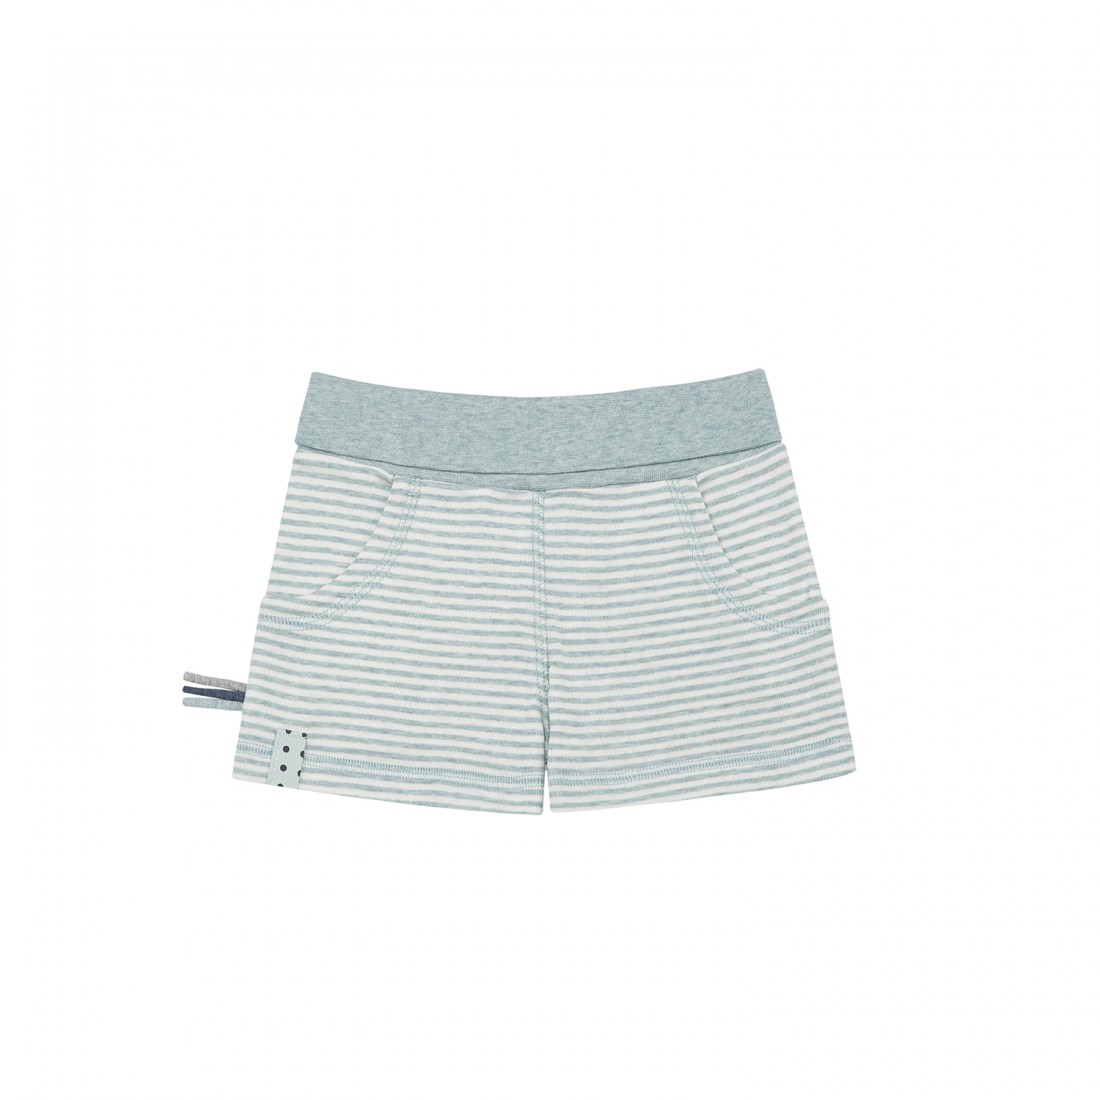 OrganicEra Organic Shorts, Aqua Striped